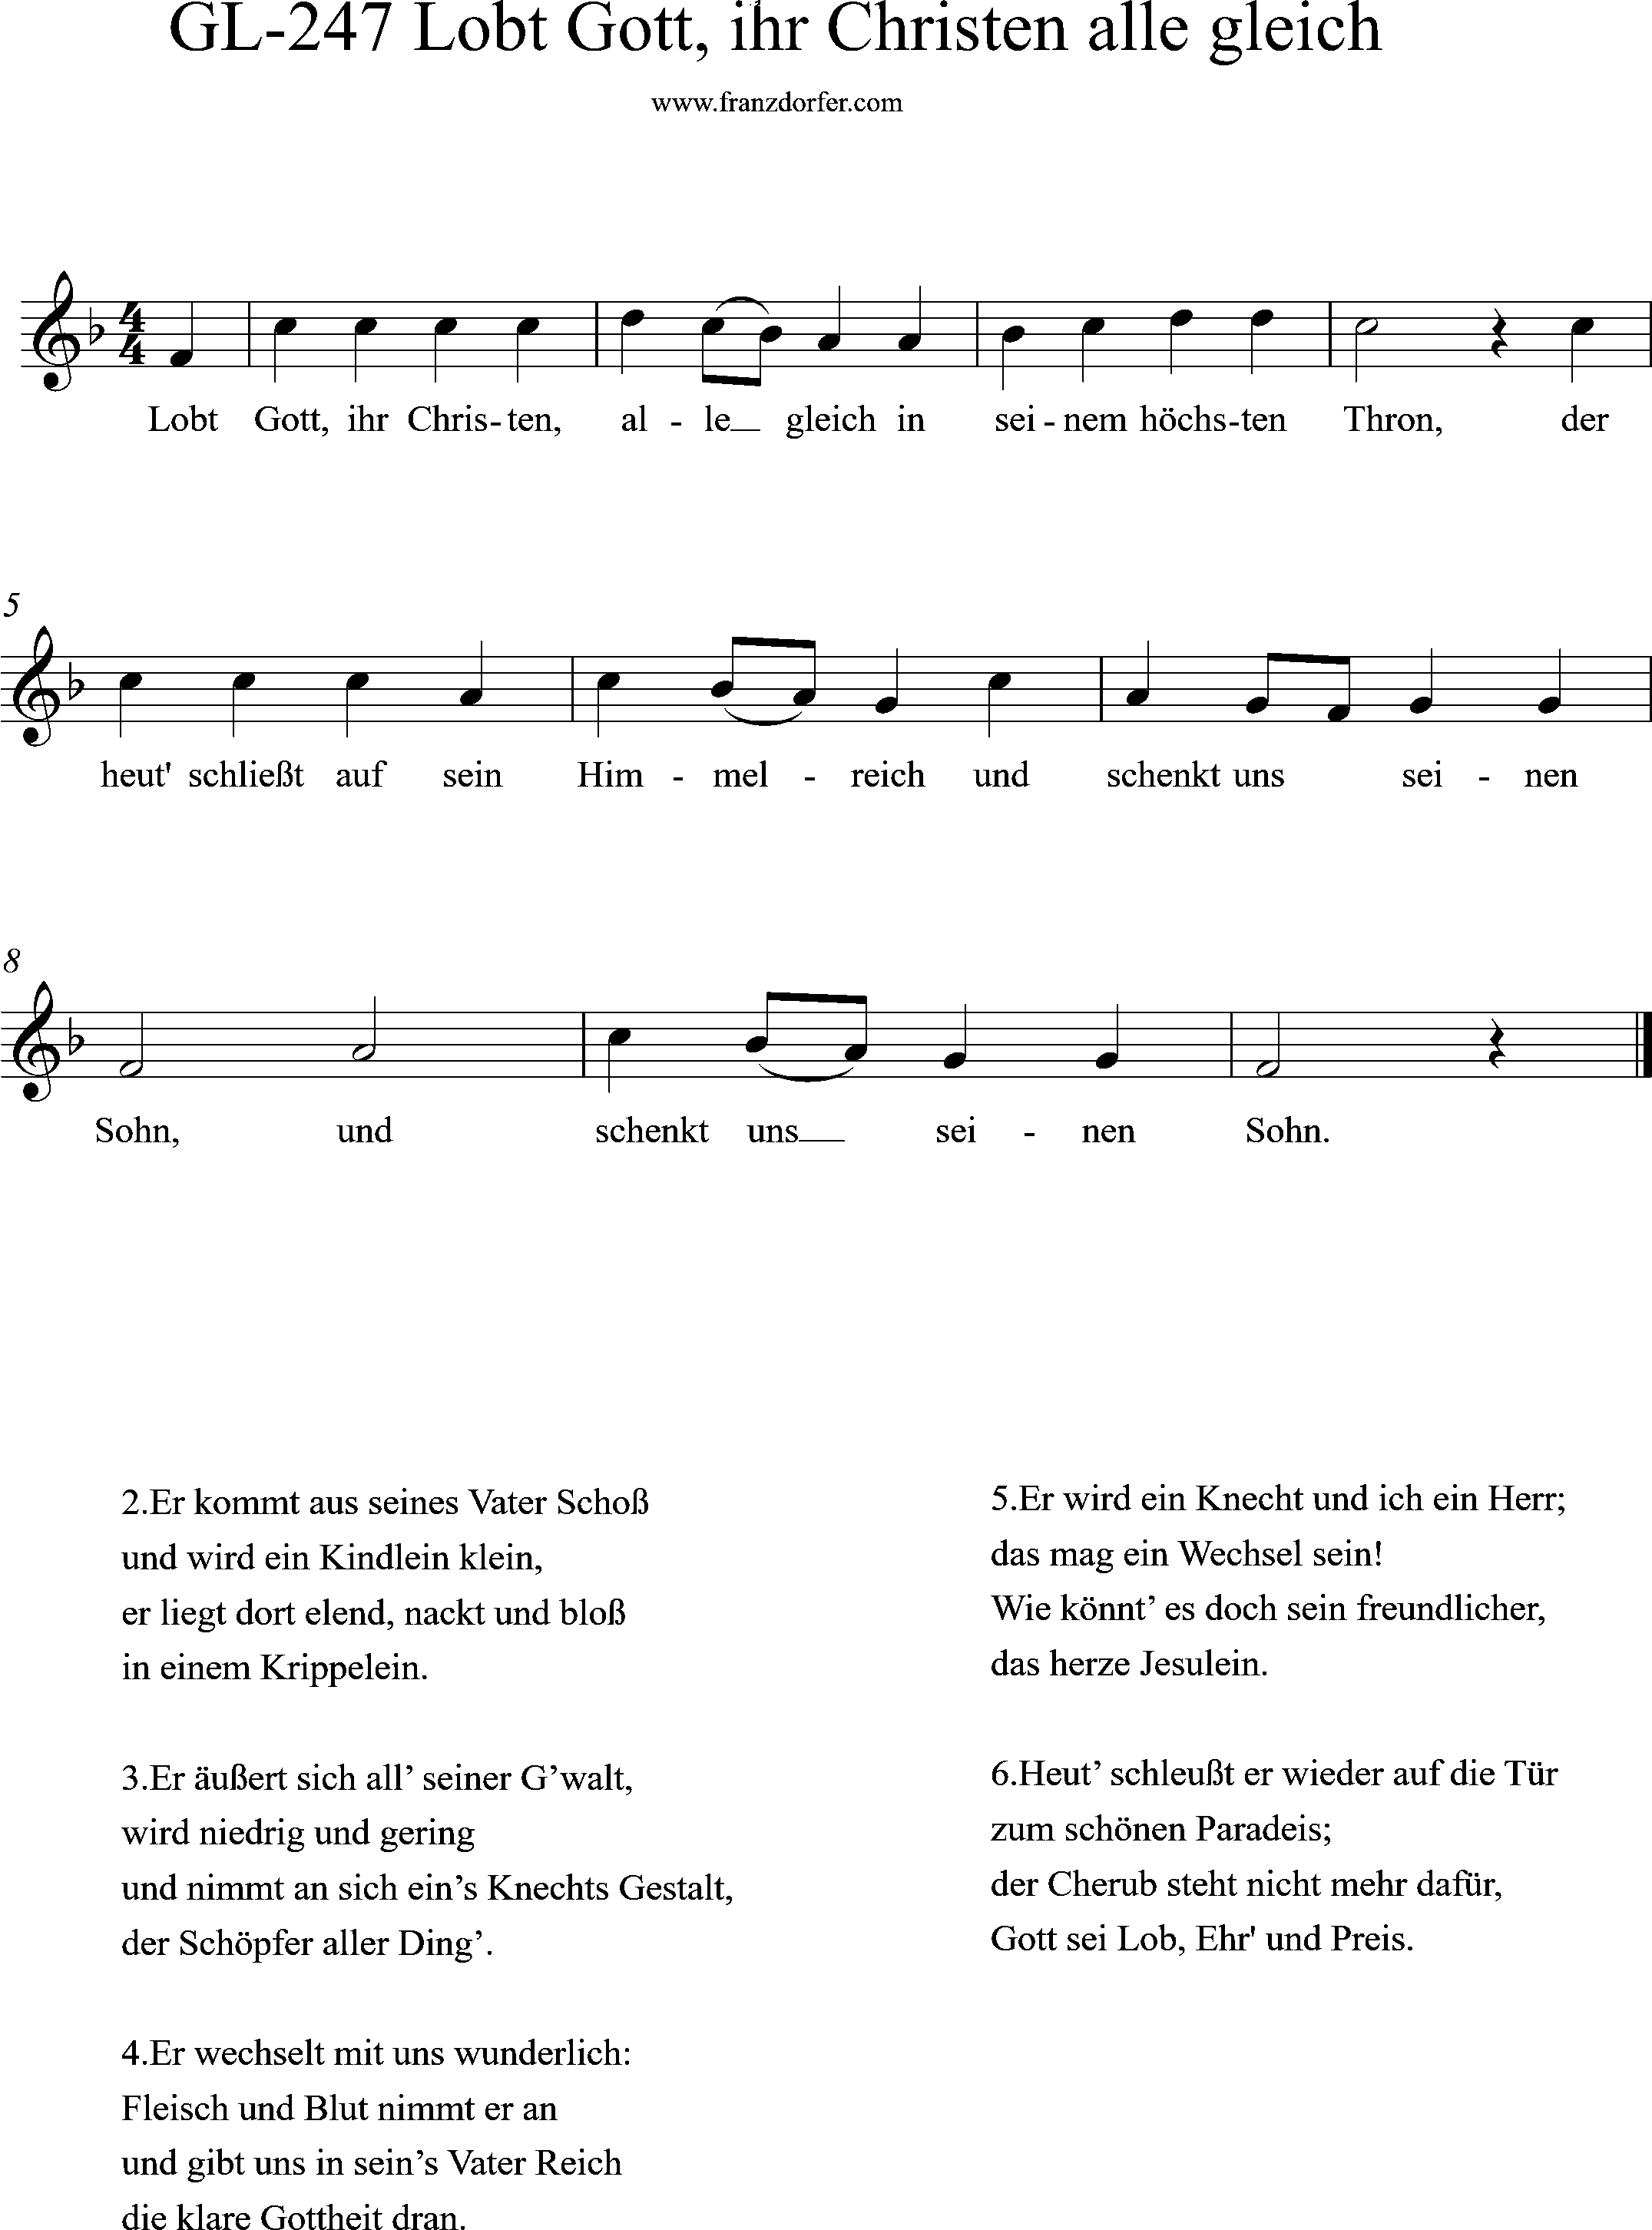 Sing noten, GL-247, F-Dur